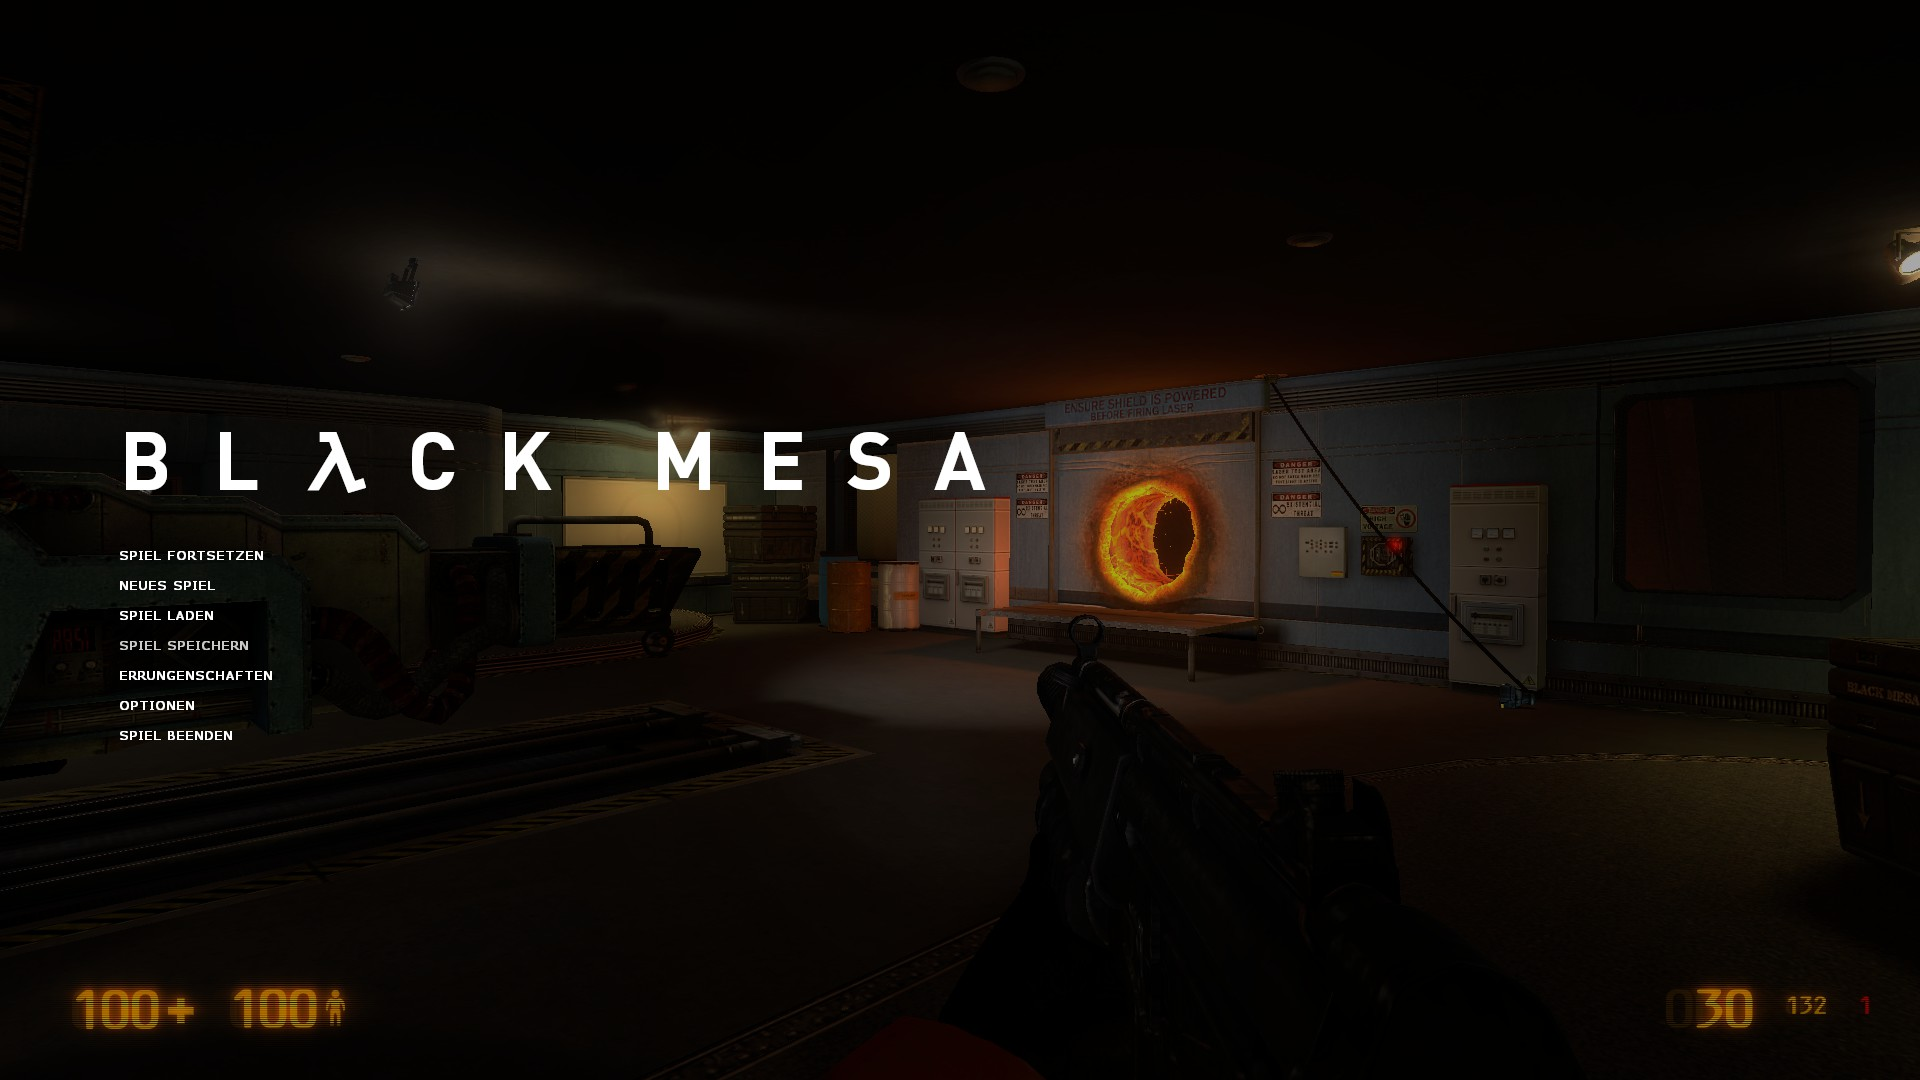 Black Mesa Wallpaper Fragw Rdige Ethik Laserkanone